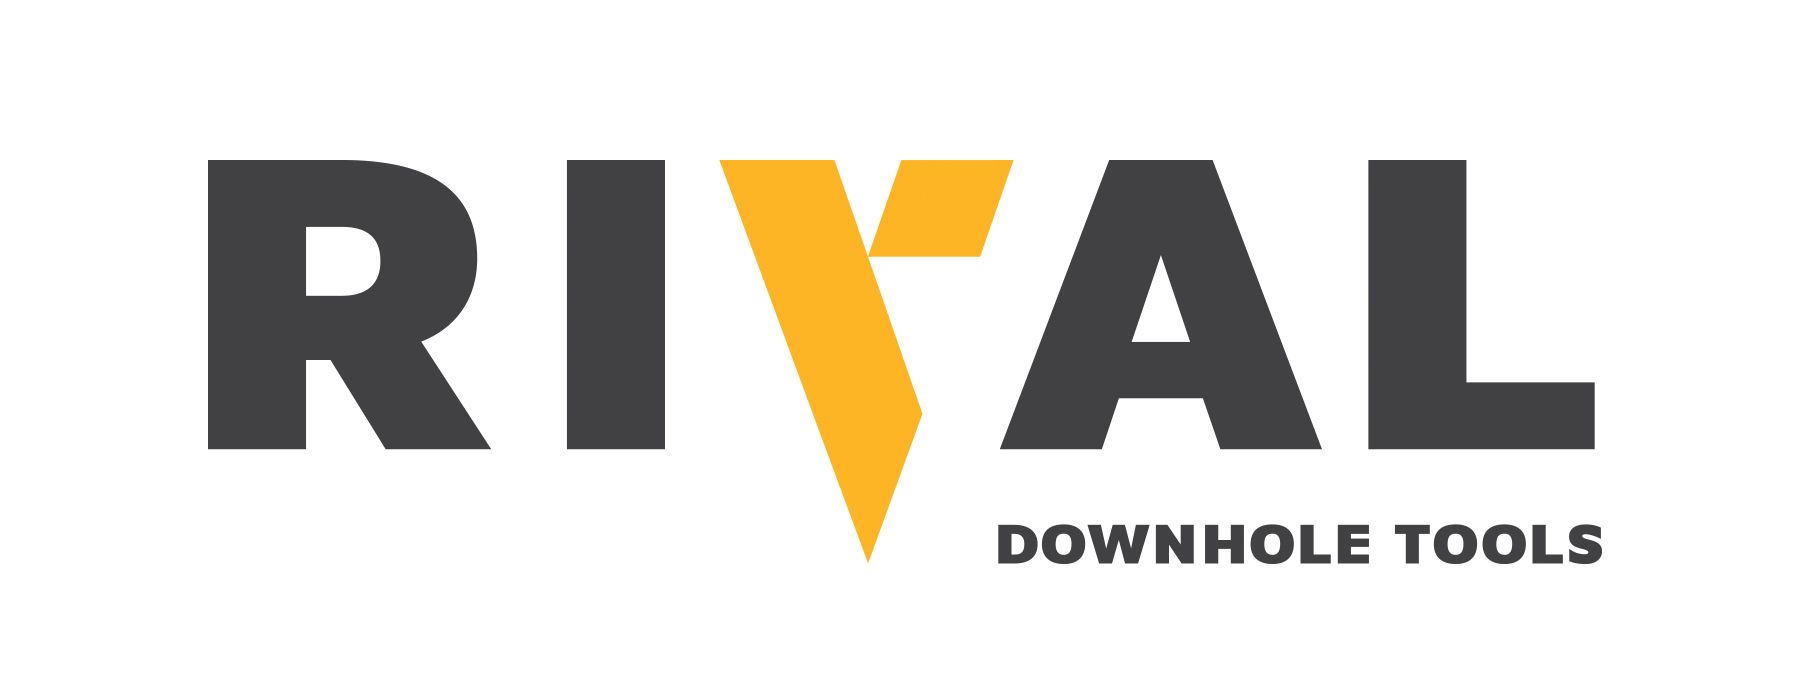 RIVAL logo